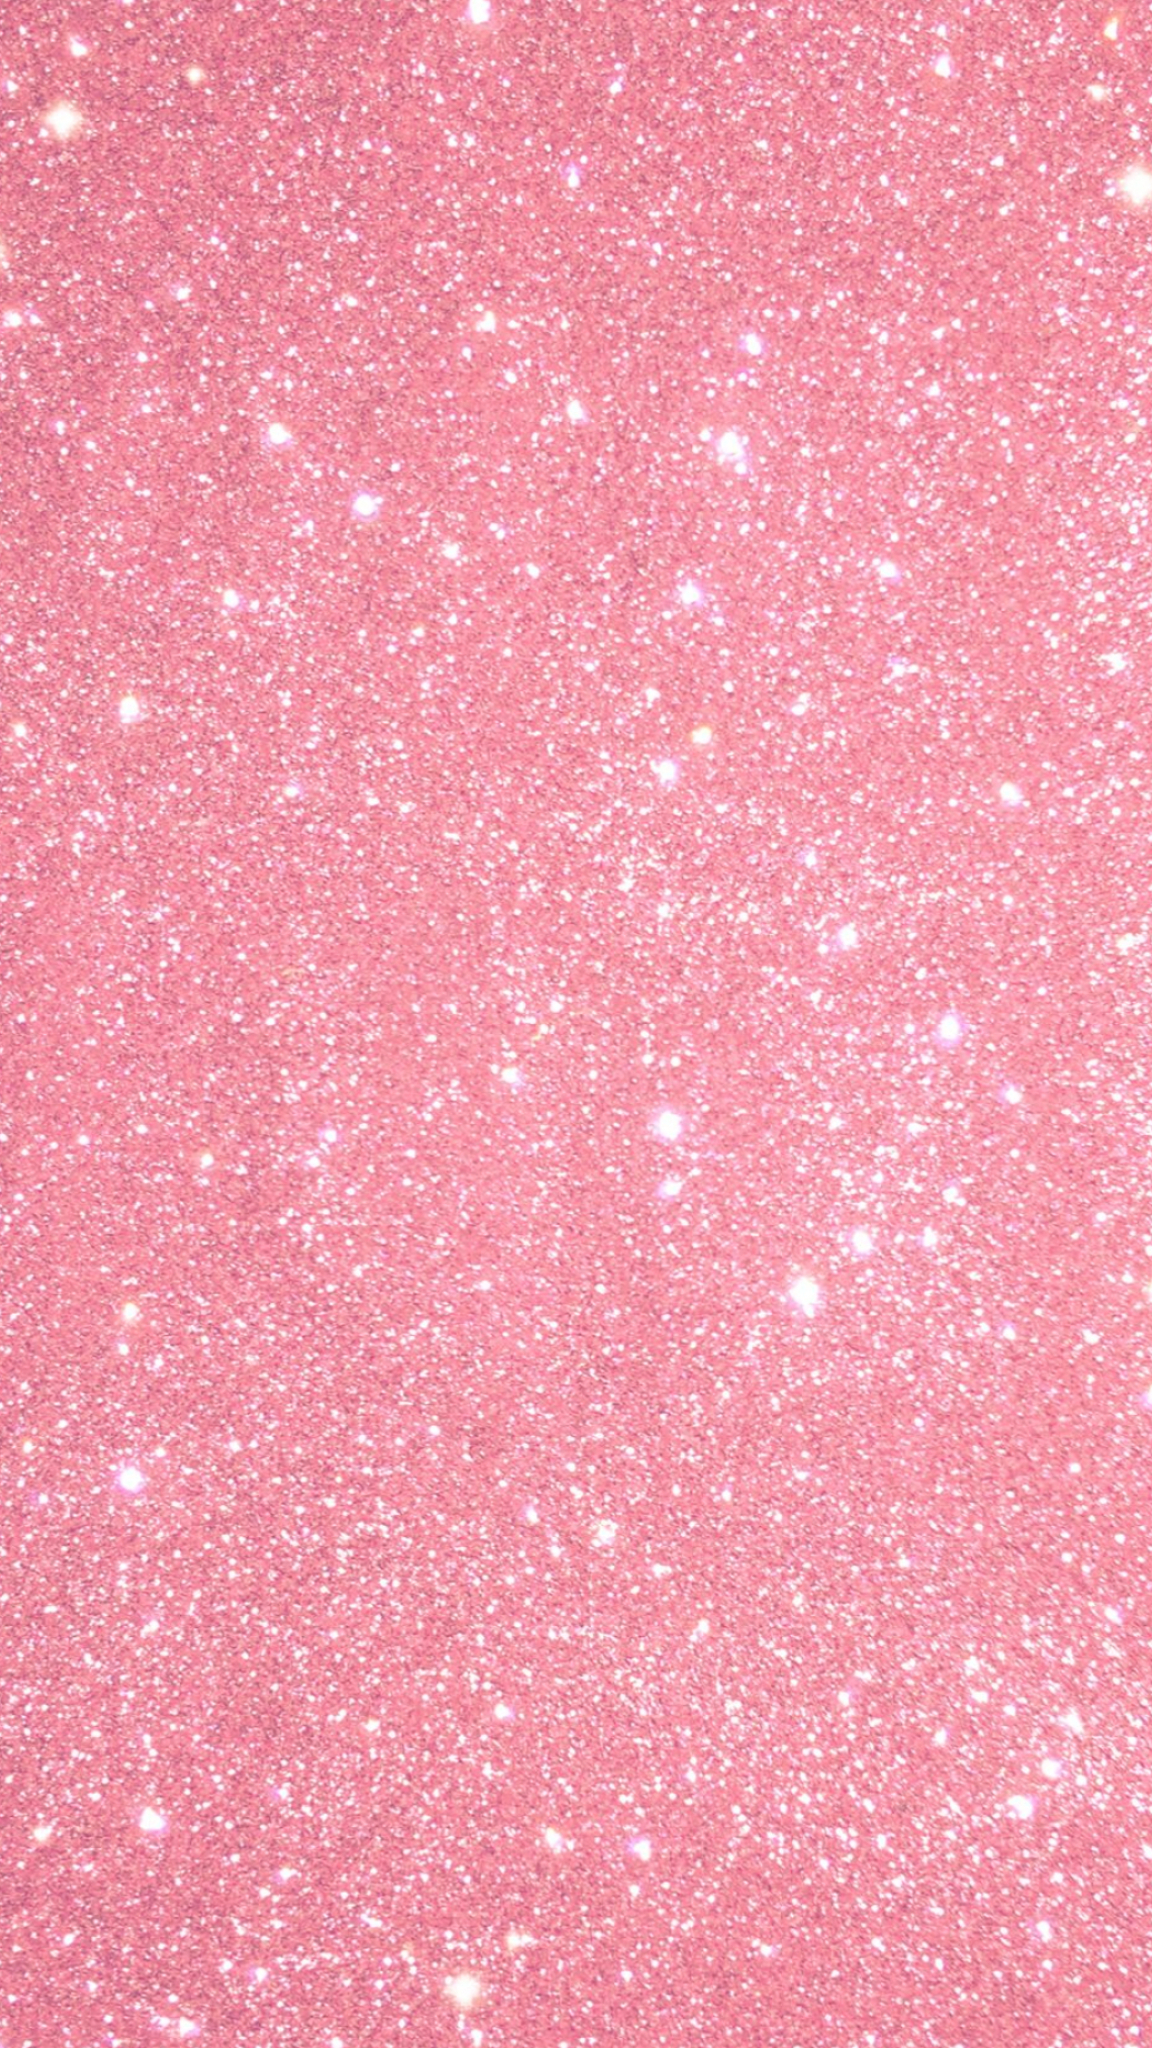 1152x2048 Pink sparkle glitter wallpaper Sparkle background sparkling glittery girly pretty | Glitter wallpaper, Sparkles glitter wallpaper, Glitter phone wallpaper